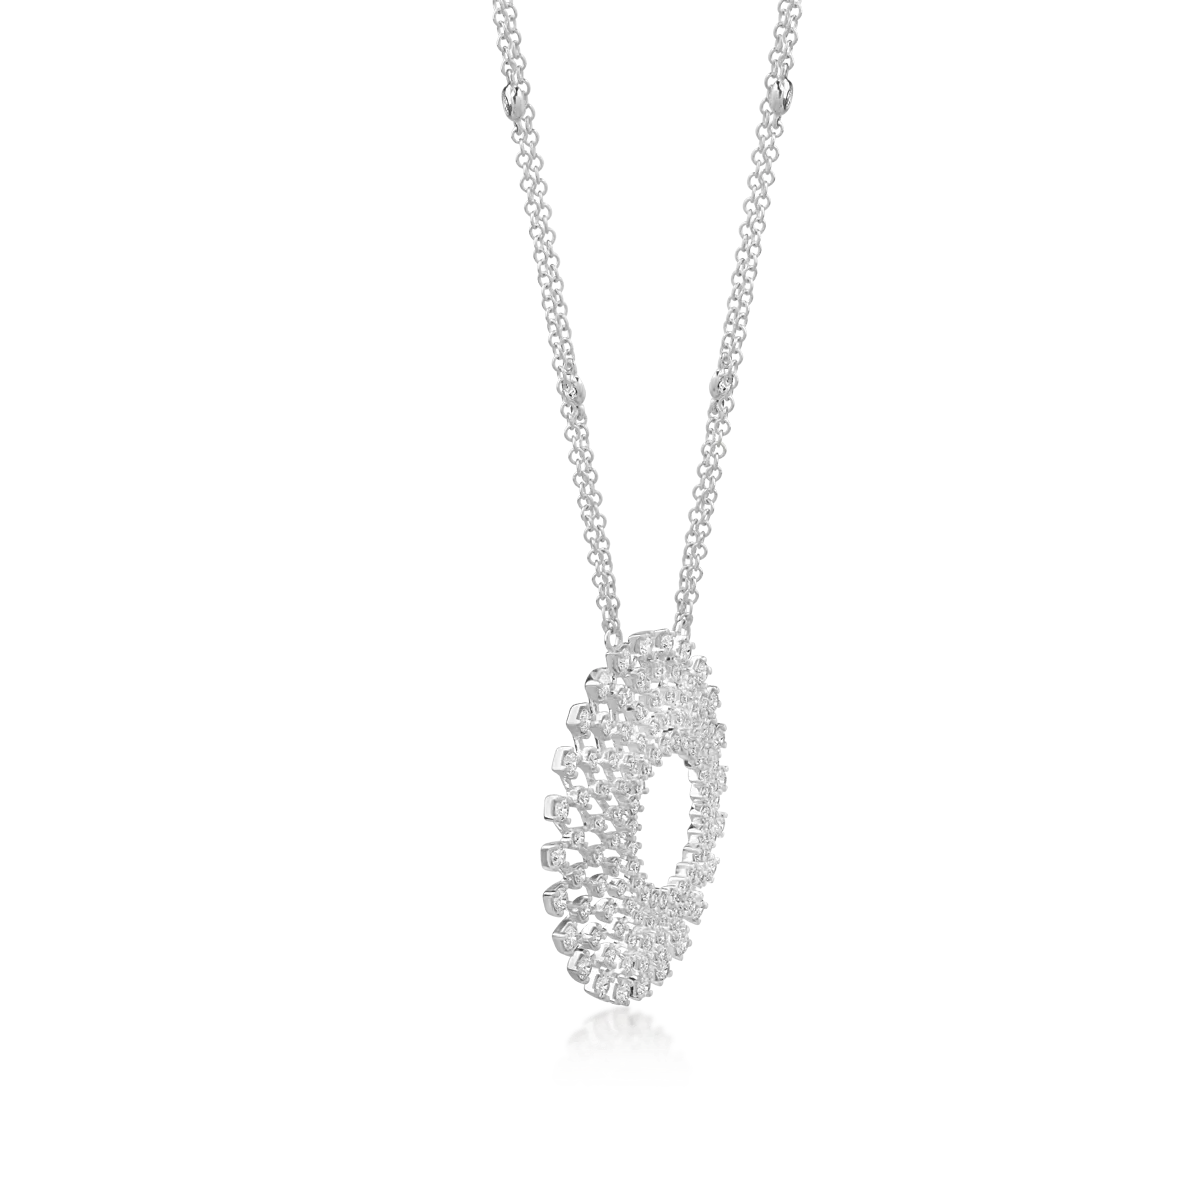 18K white gold pendant chain with 2.04ct diamonds